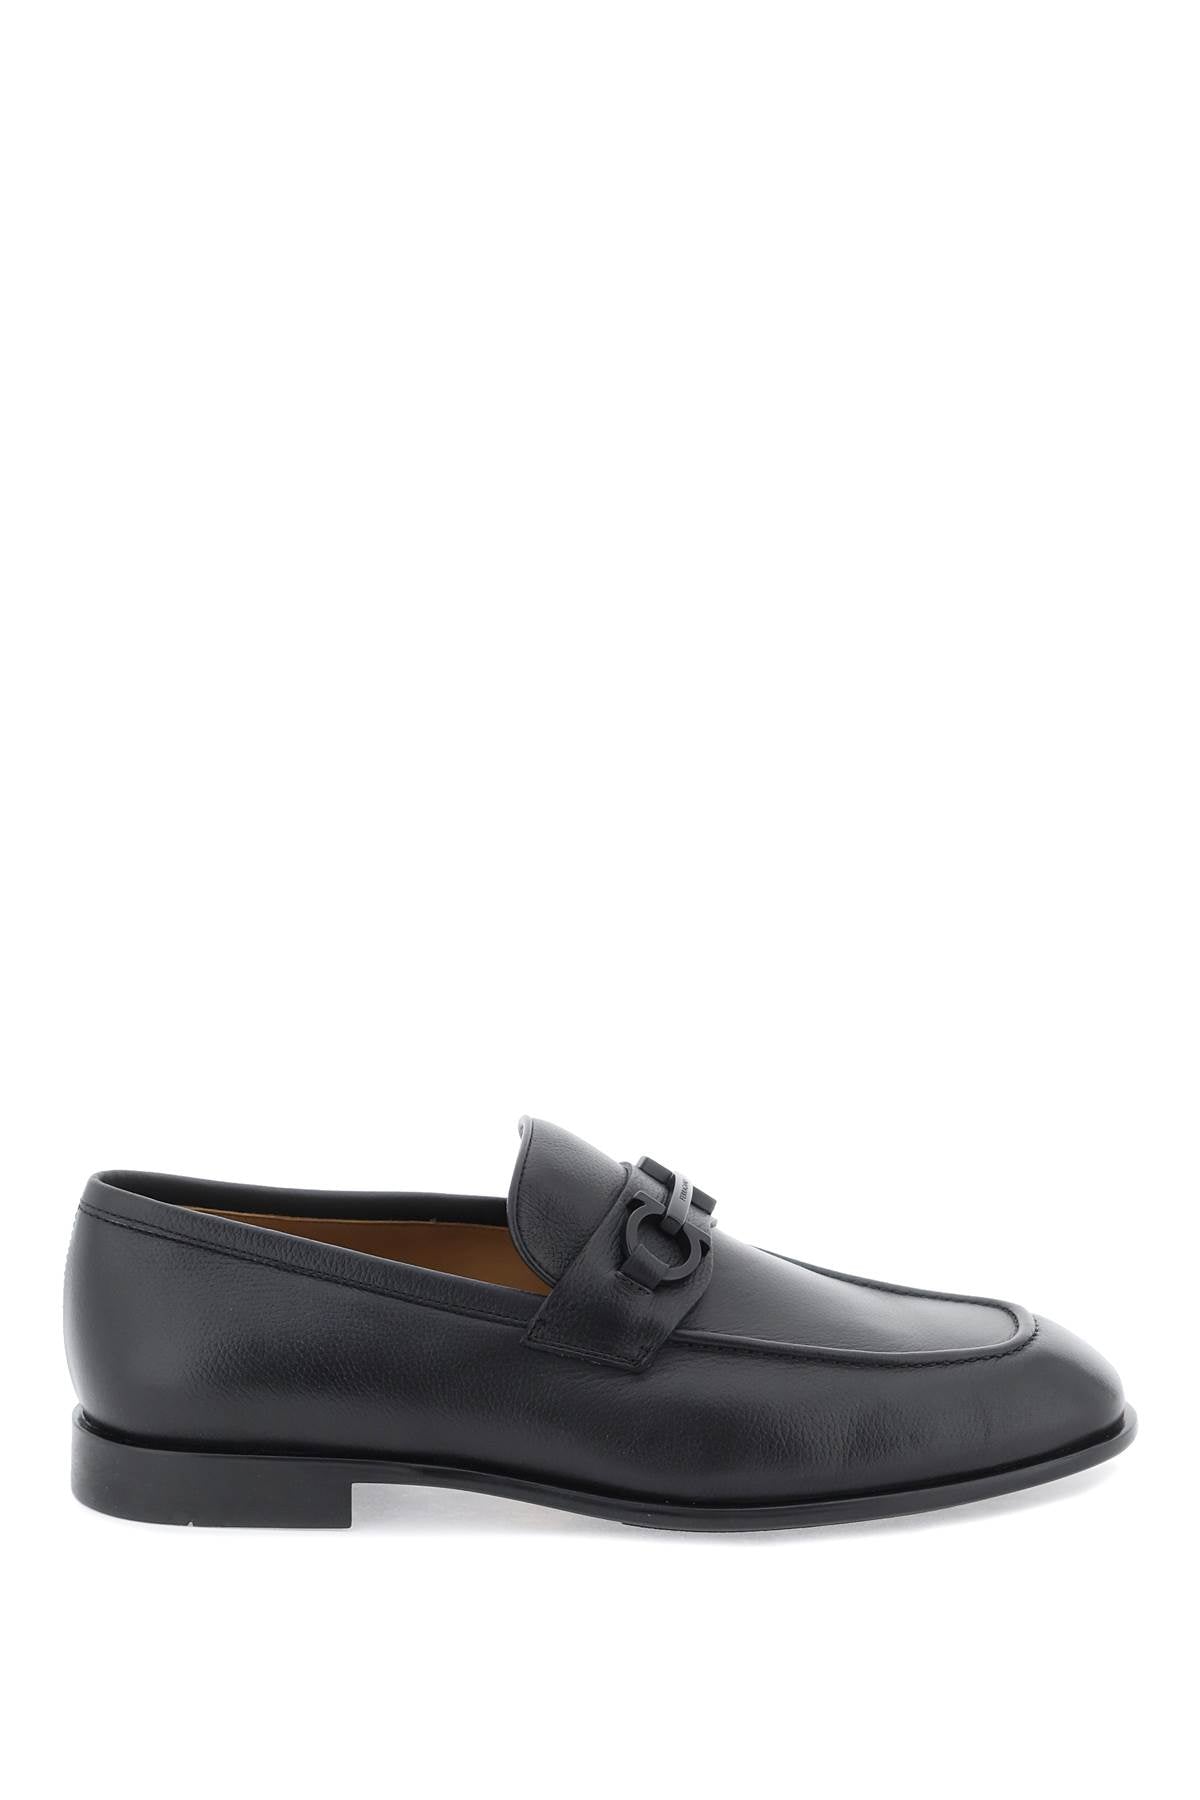 FERRAGAMO Gancini Hook Loafers in Black Grained Leather for Men